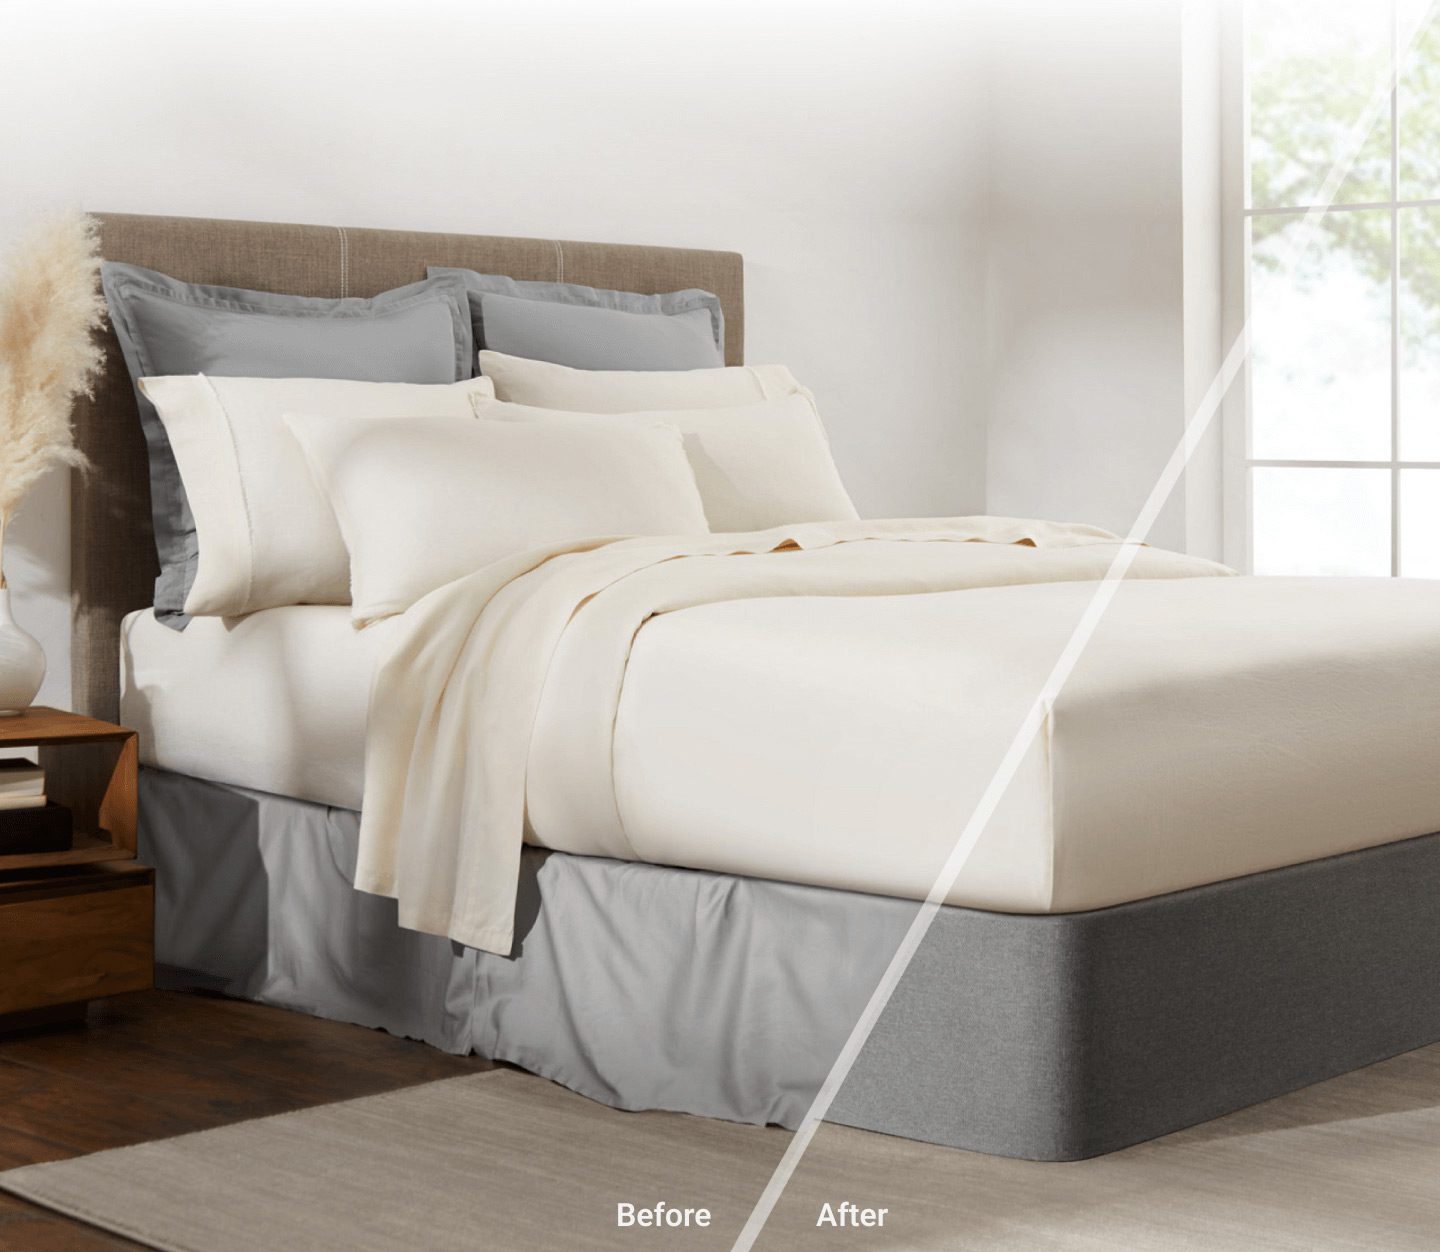 Wrap Around Bed Skirt - Circa Bed Wrap  Modern Bed Skirt Alternative -  Standard Textile Home